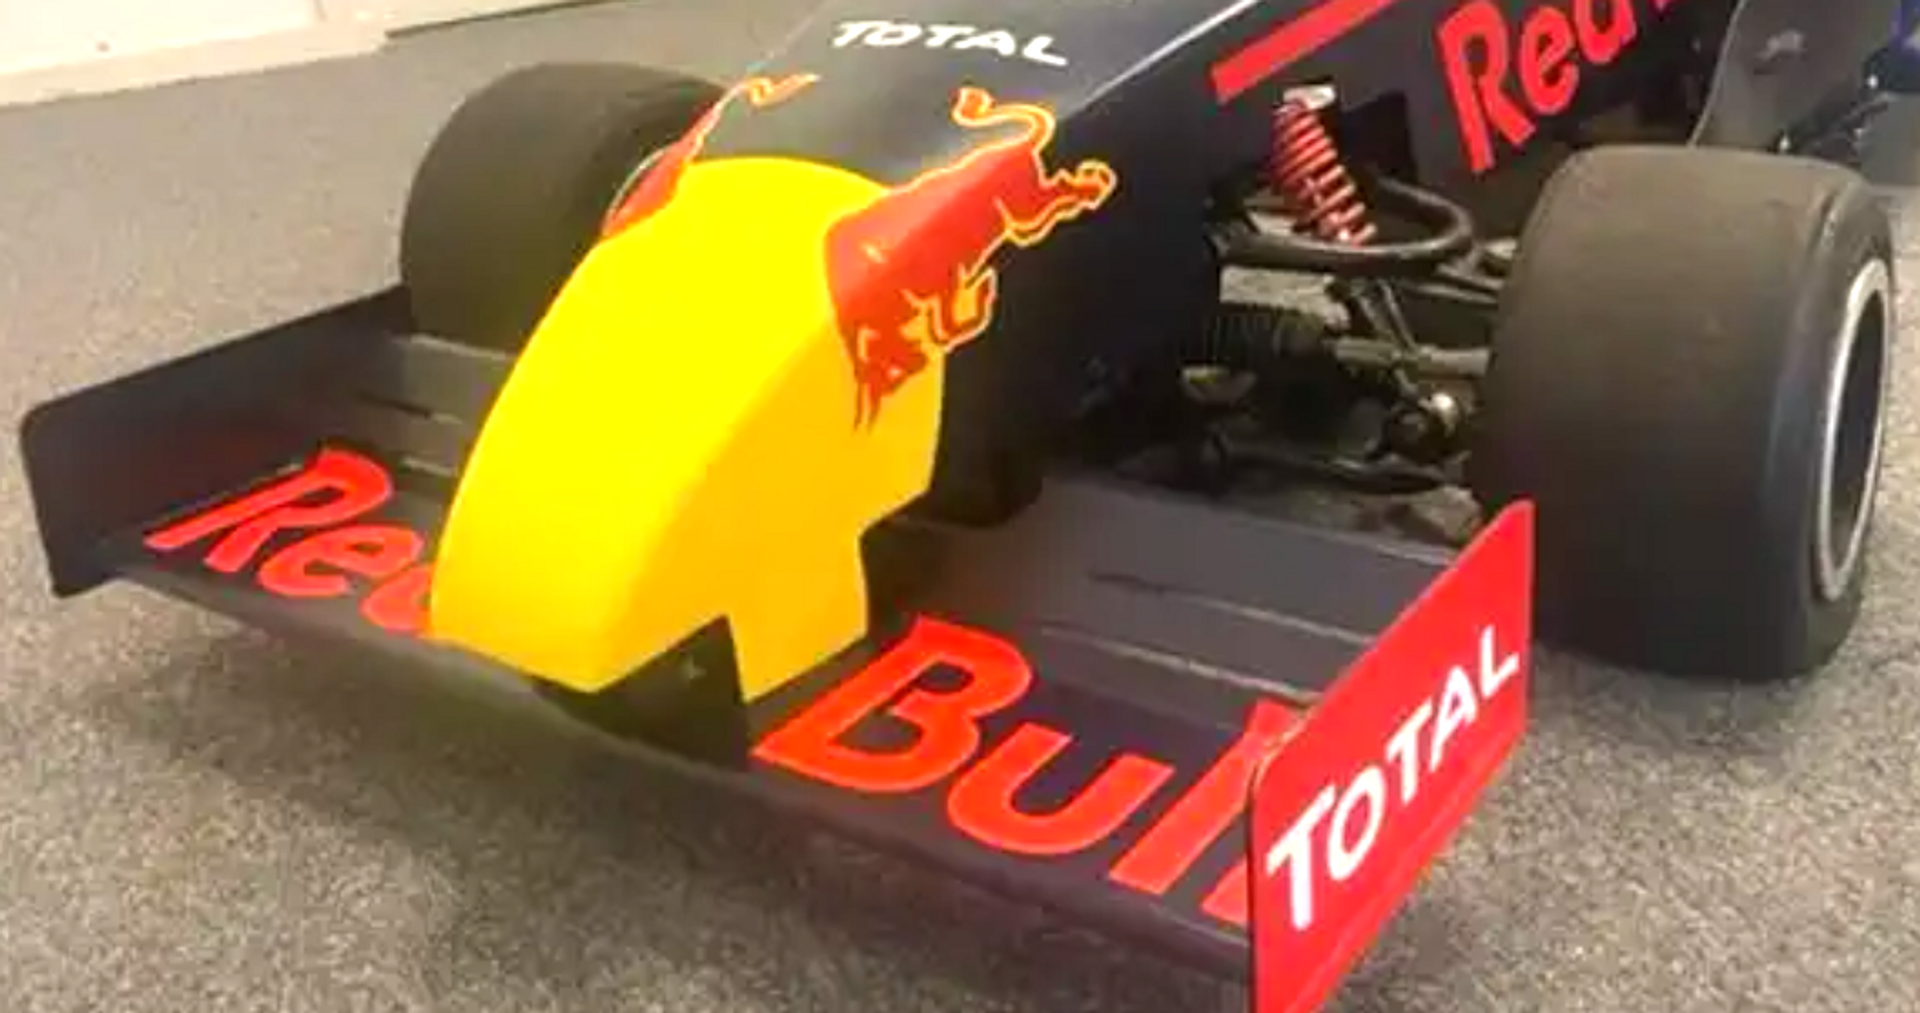 Formule 1-auto Max Verstappen